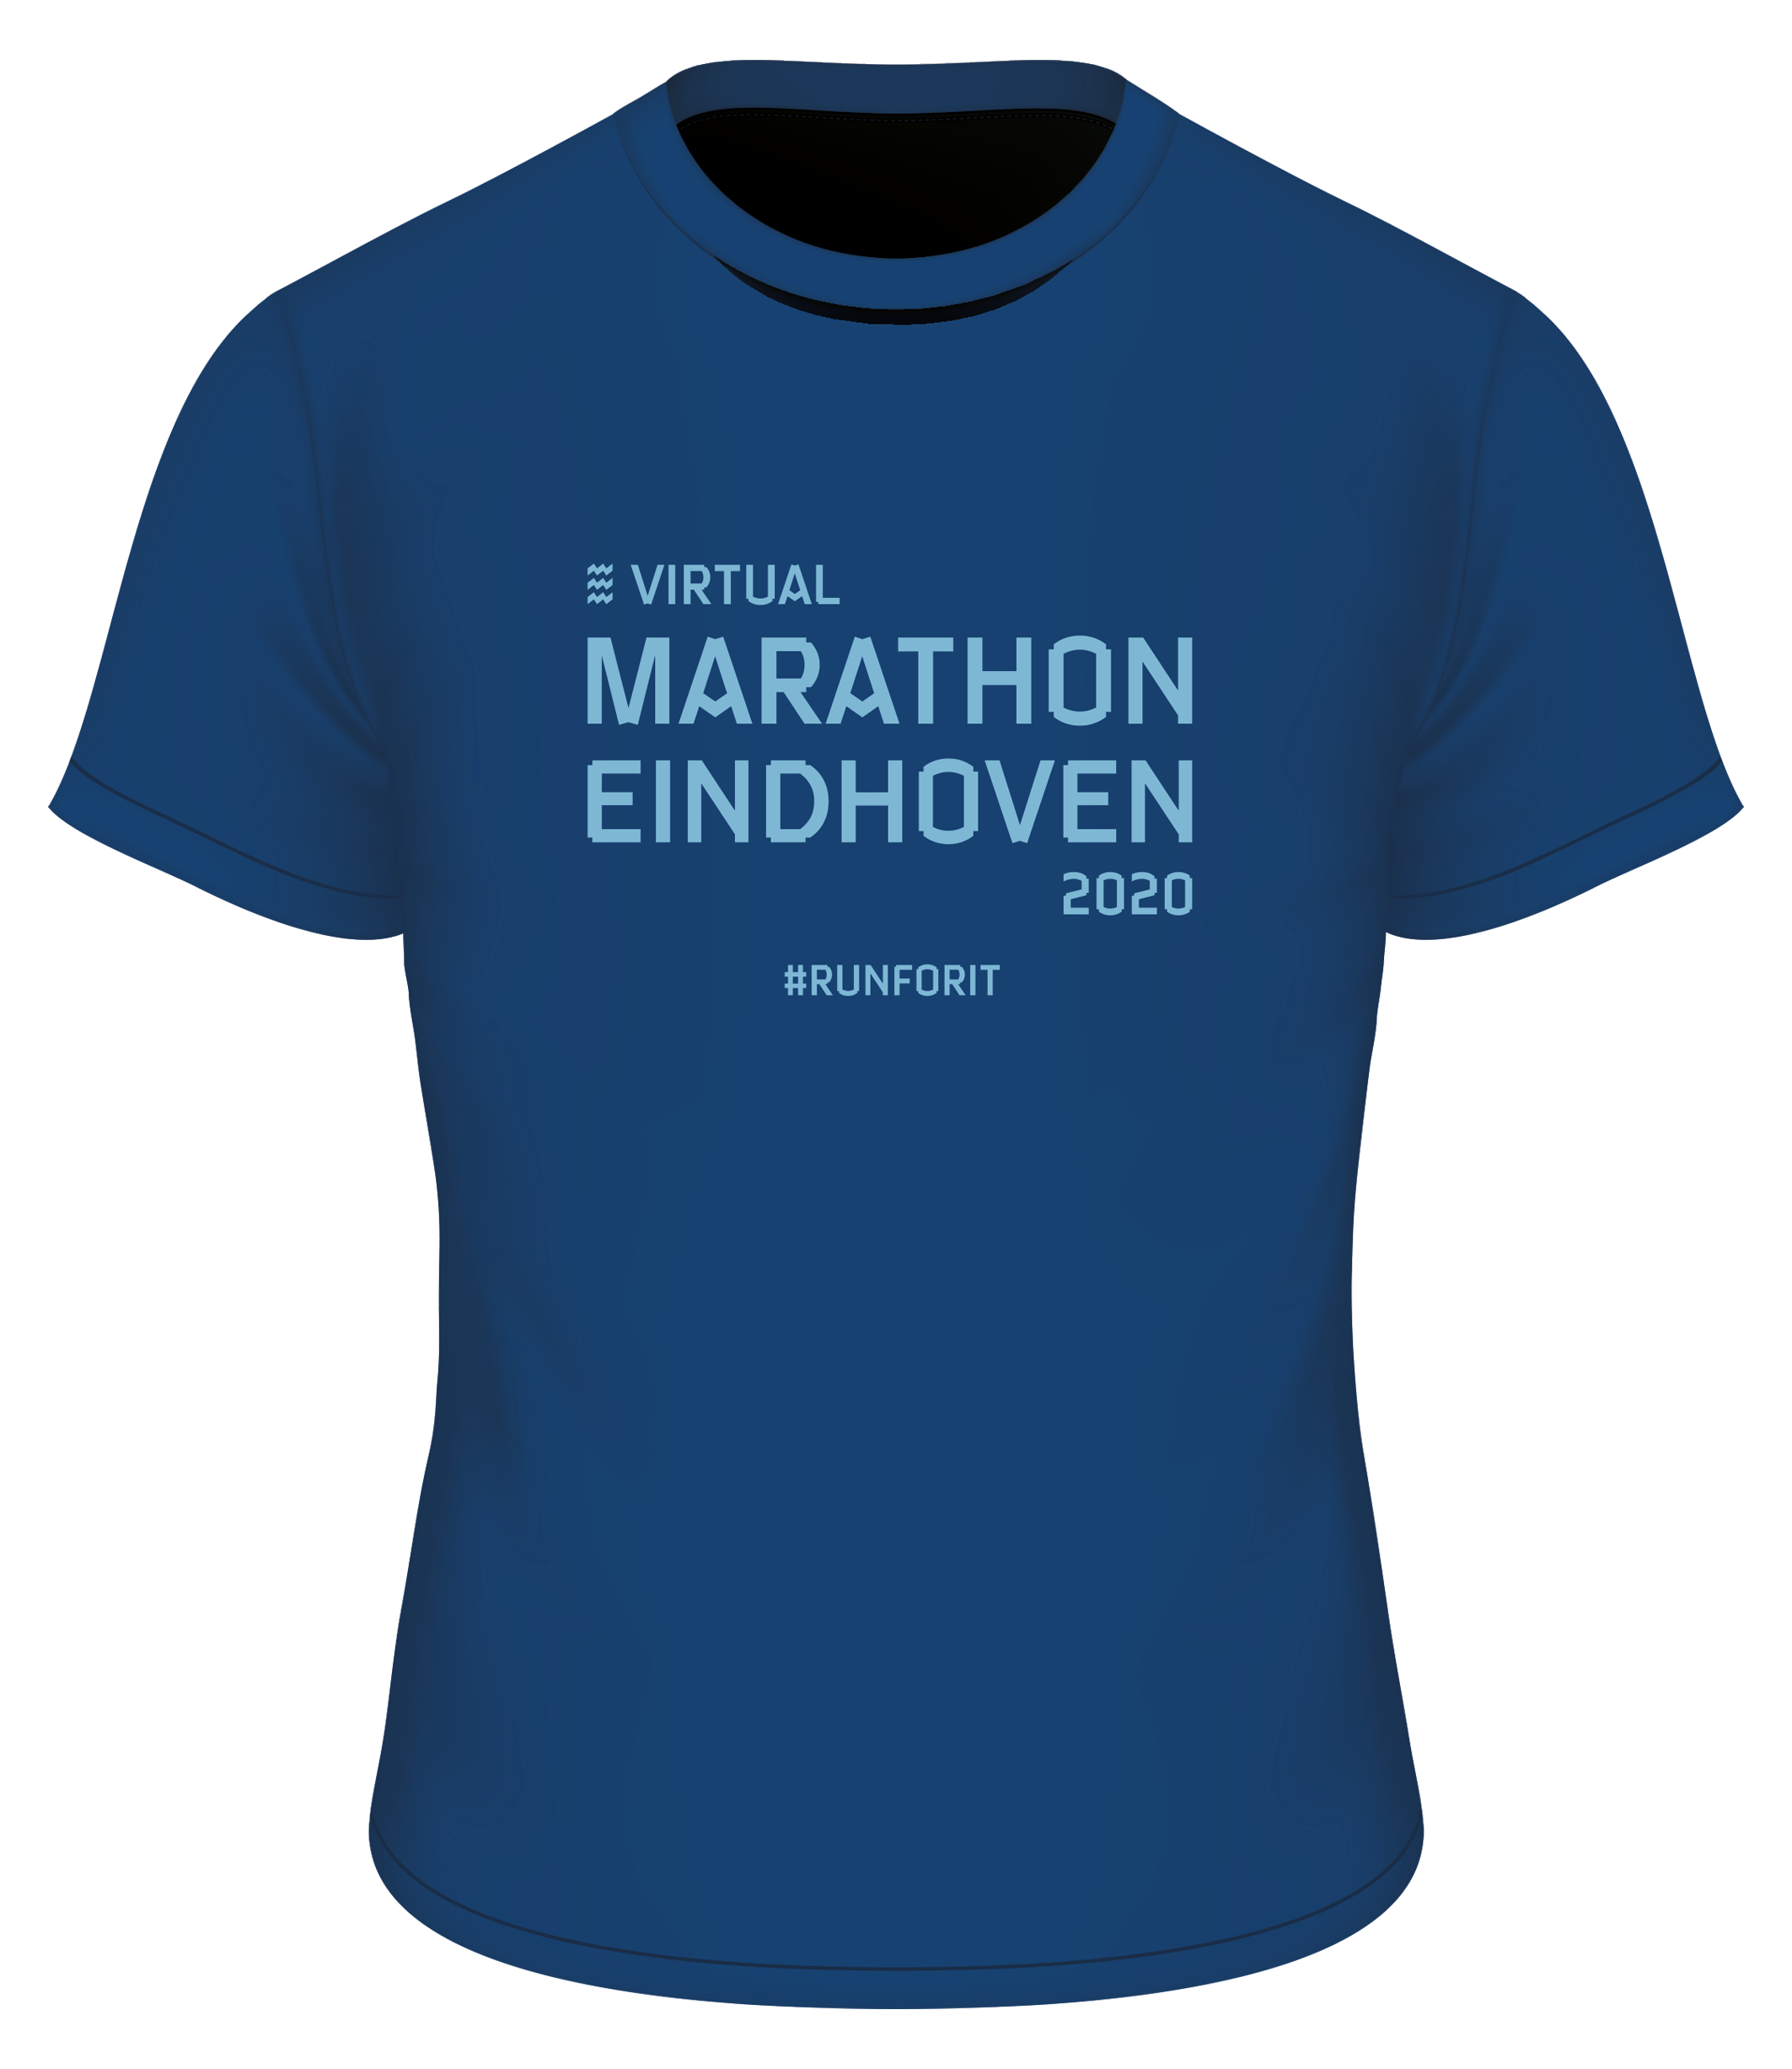 Run the Marathon Eindhoven from home